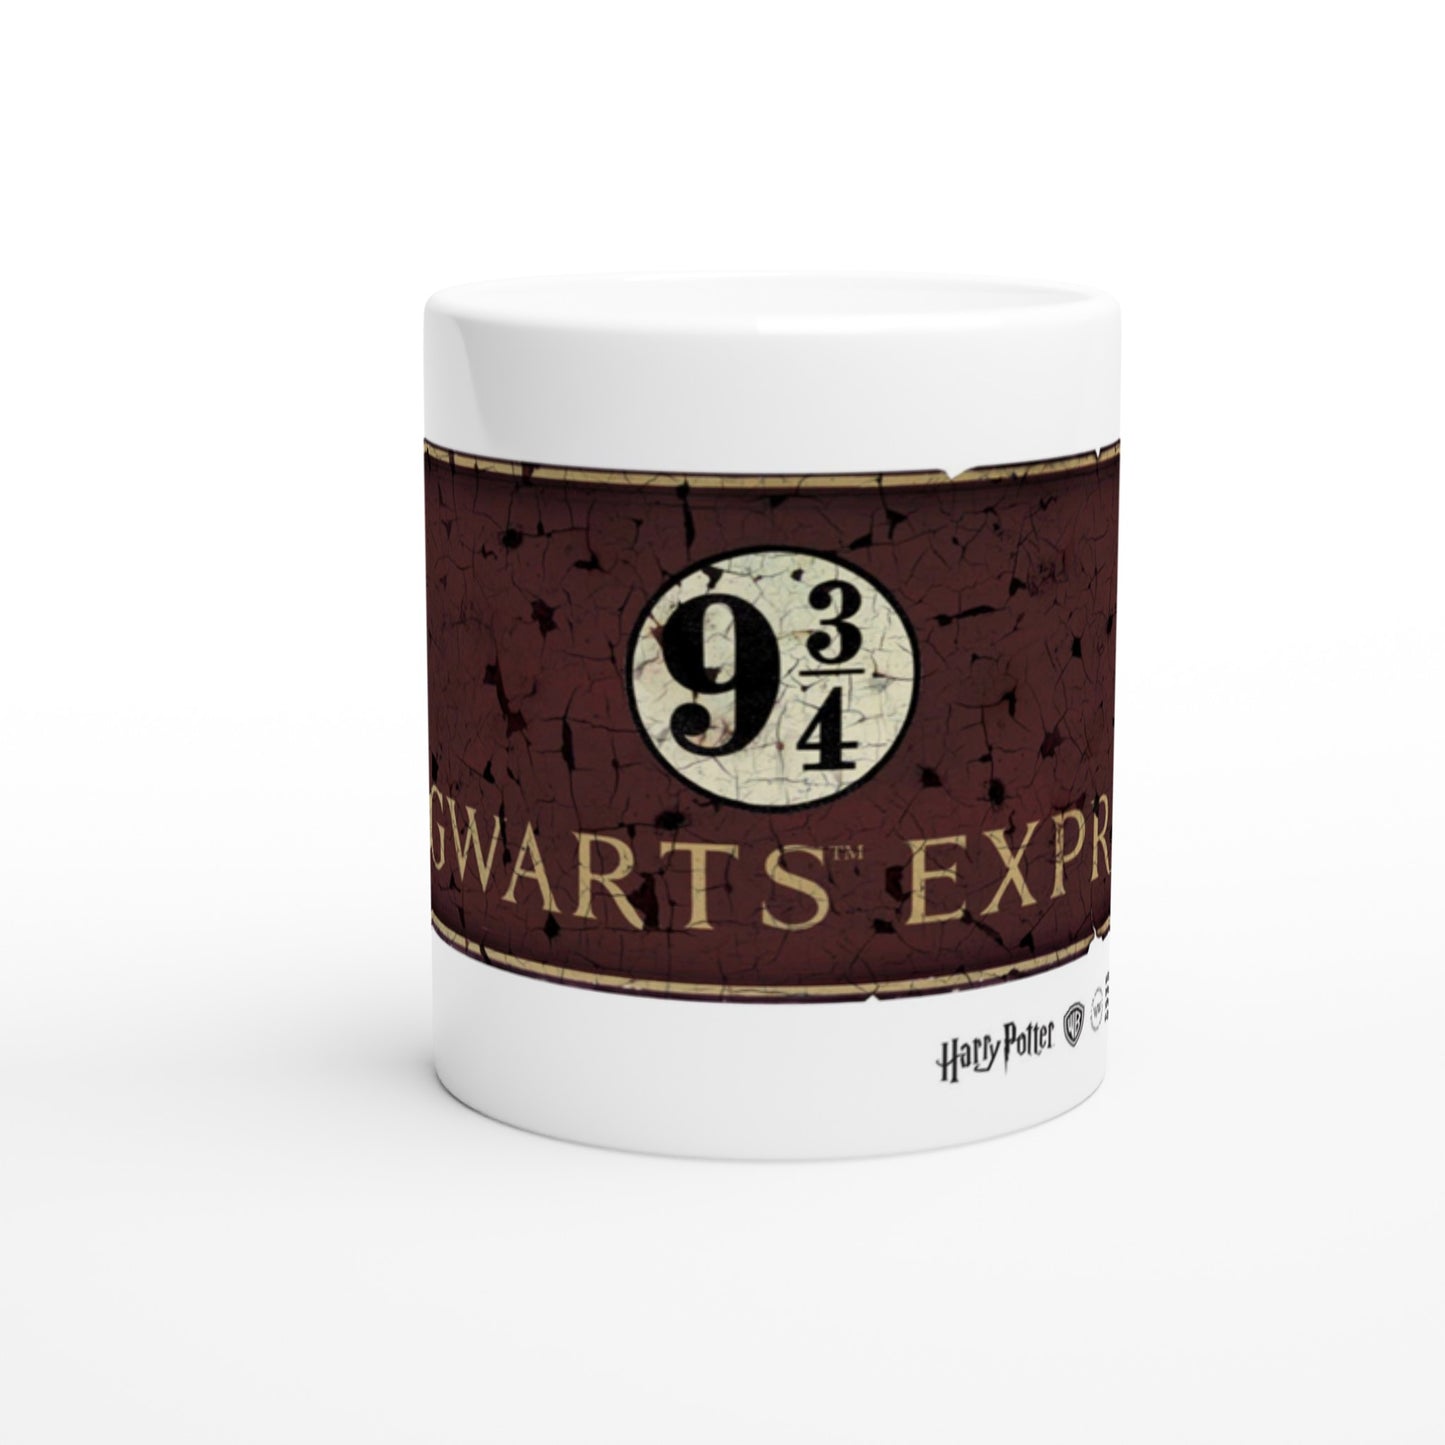 Official Harry Potter Mug - Hogwarts Express 9 3/4 - 330ml White Mug